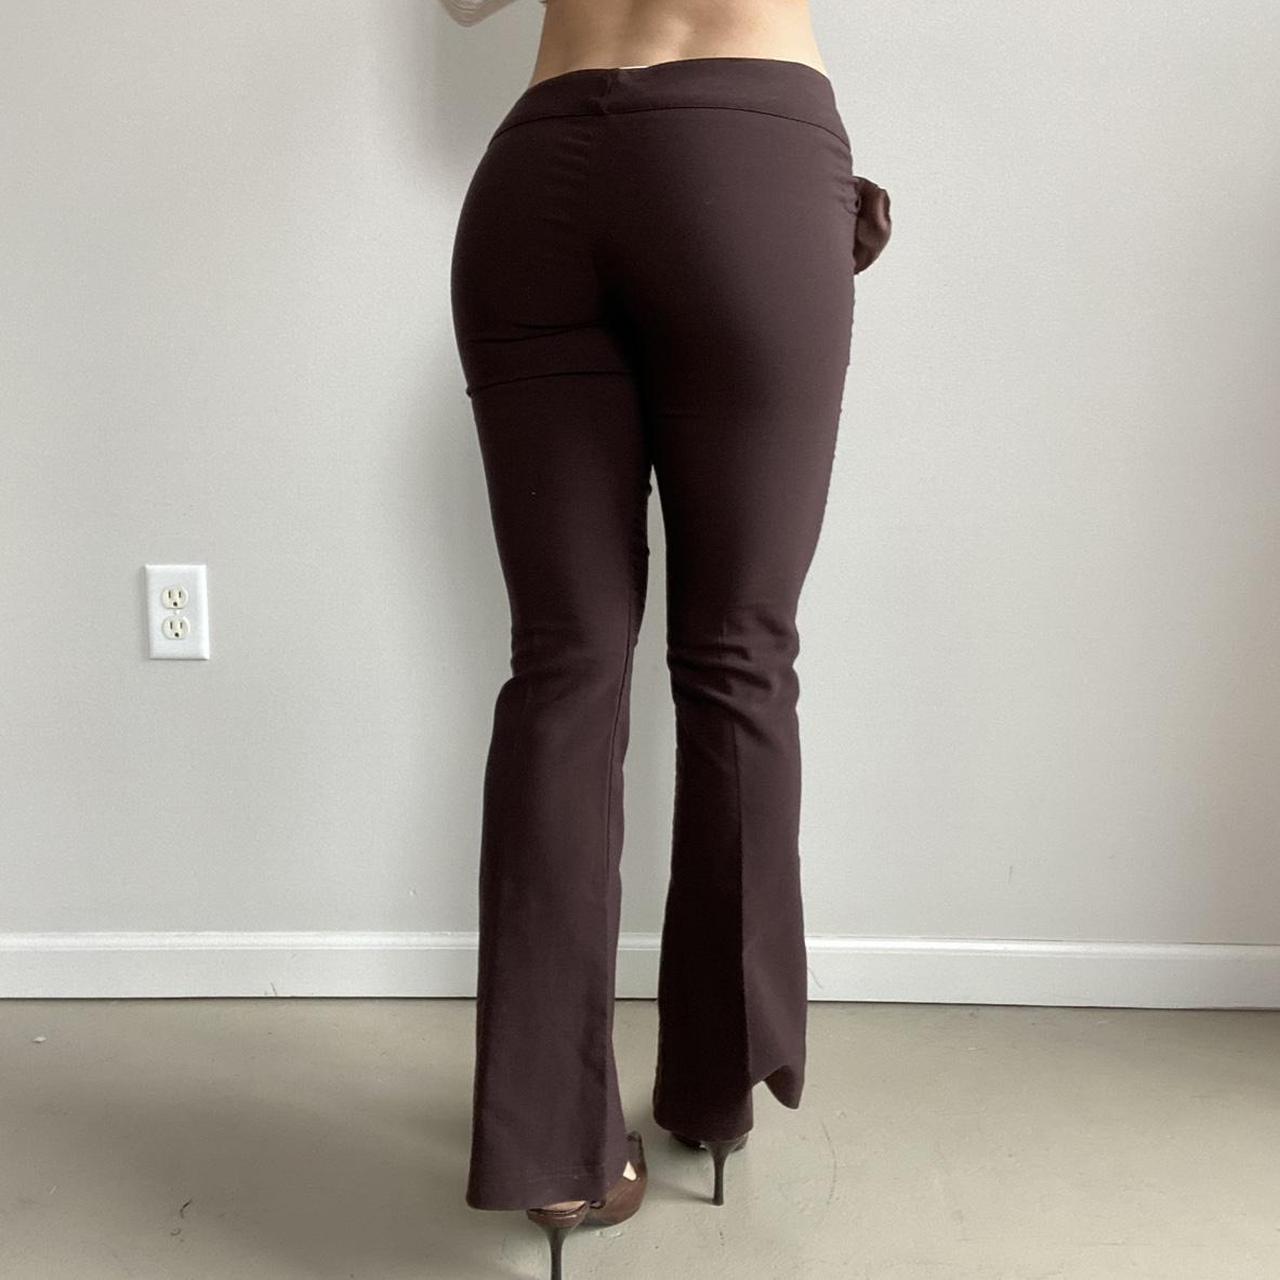  Brown Bootcut Yoga Pants